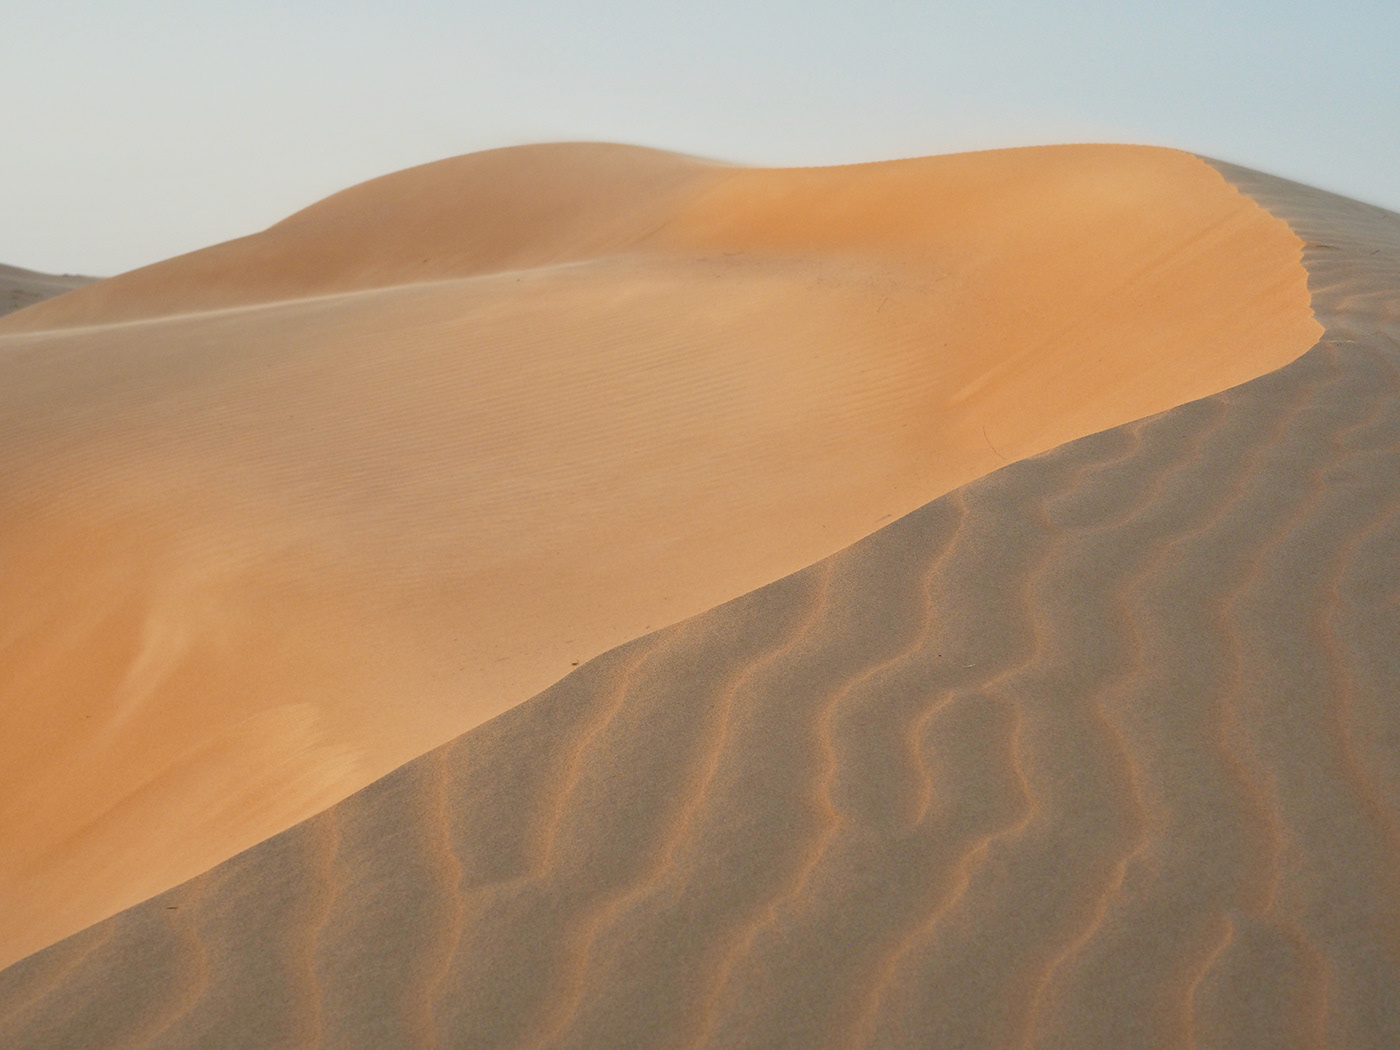 Wahiba. desert. Oman.